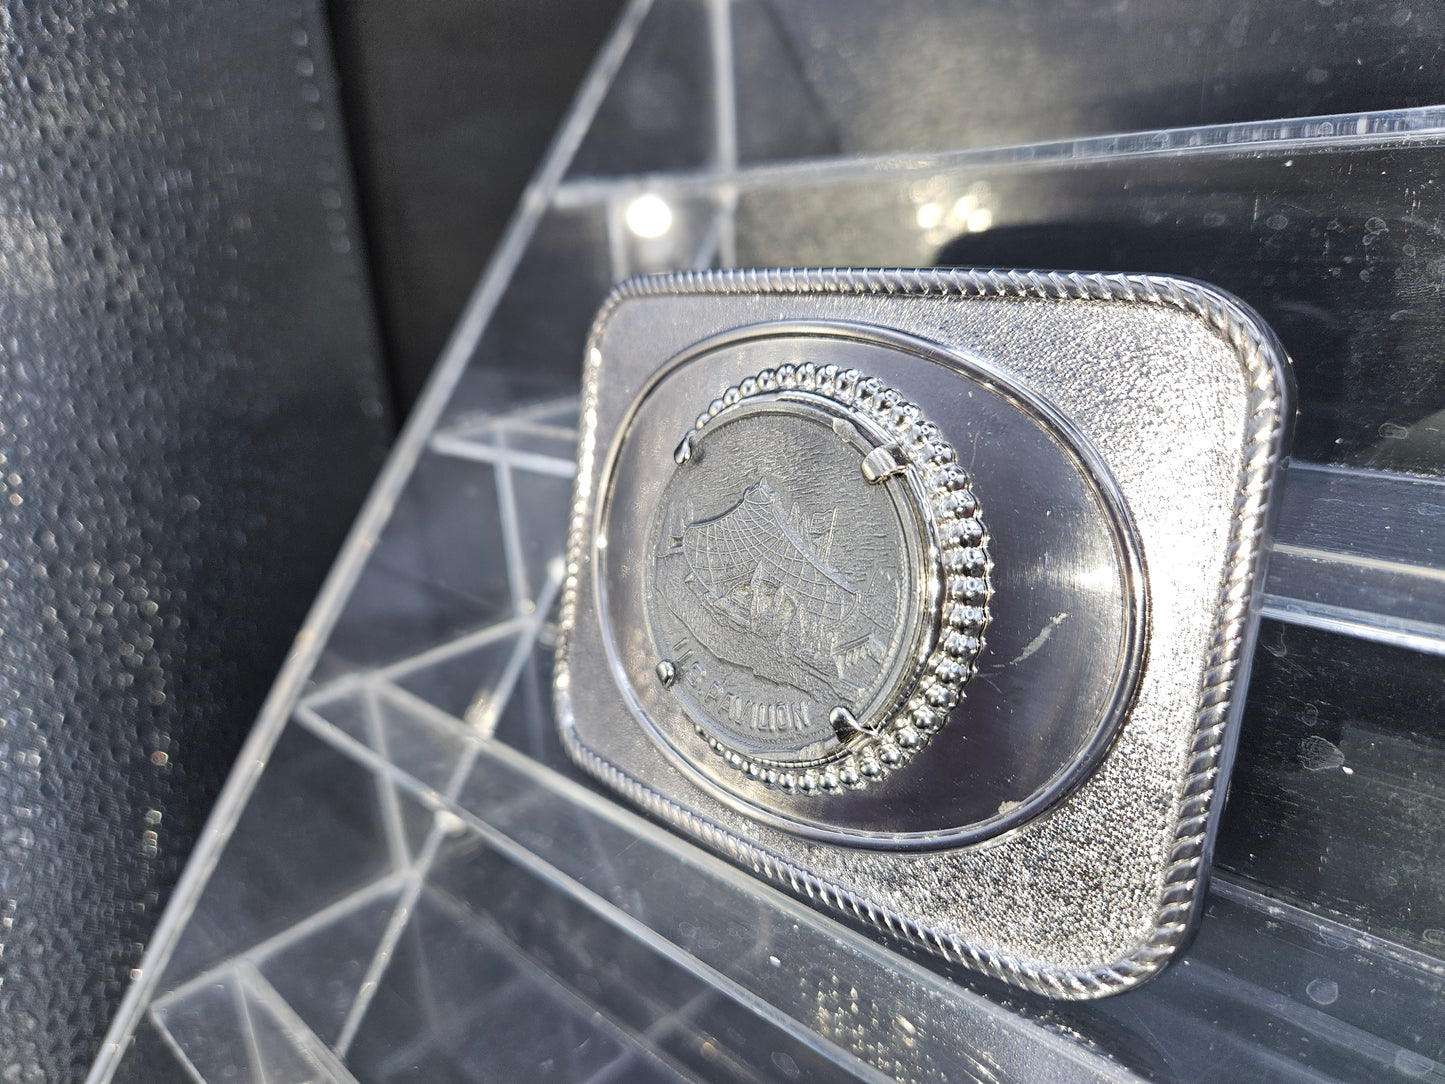 Spokane's EXPO '74 beltbuckle  silver